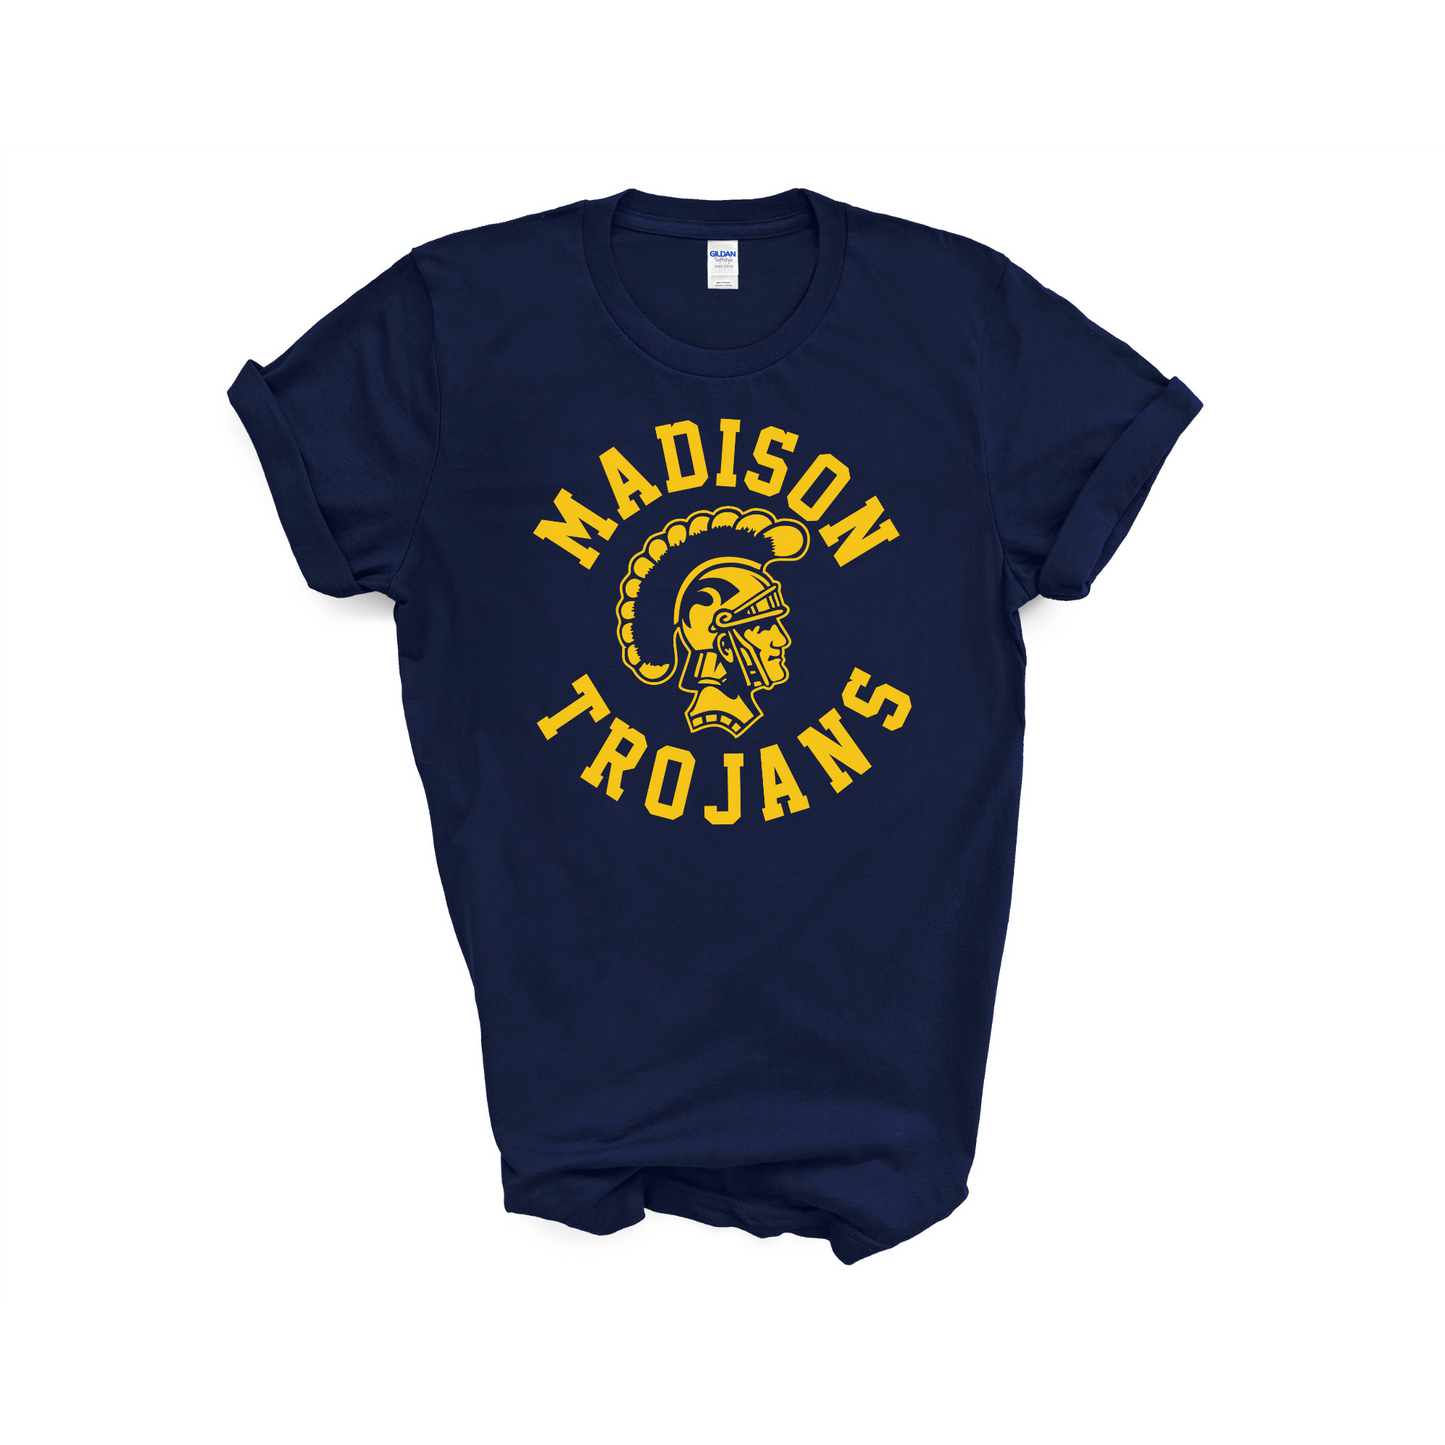 Madison Trojans Navy T-Shirt